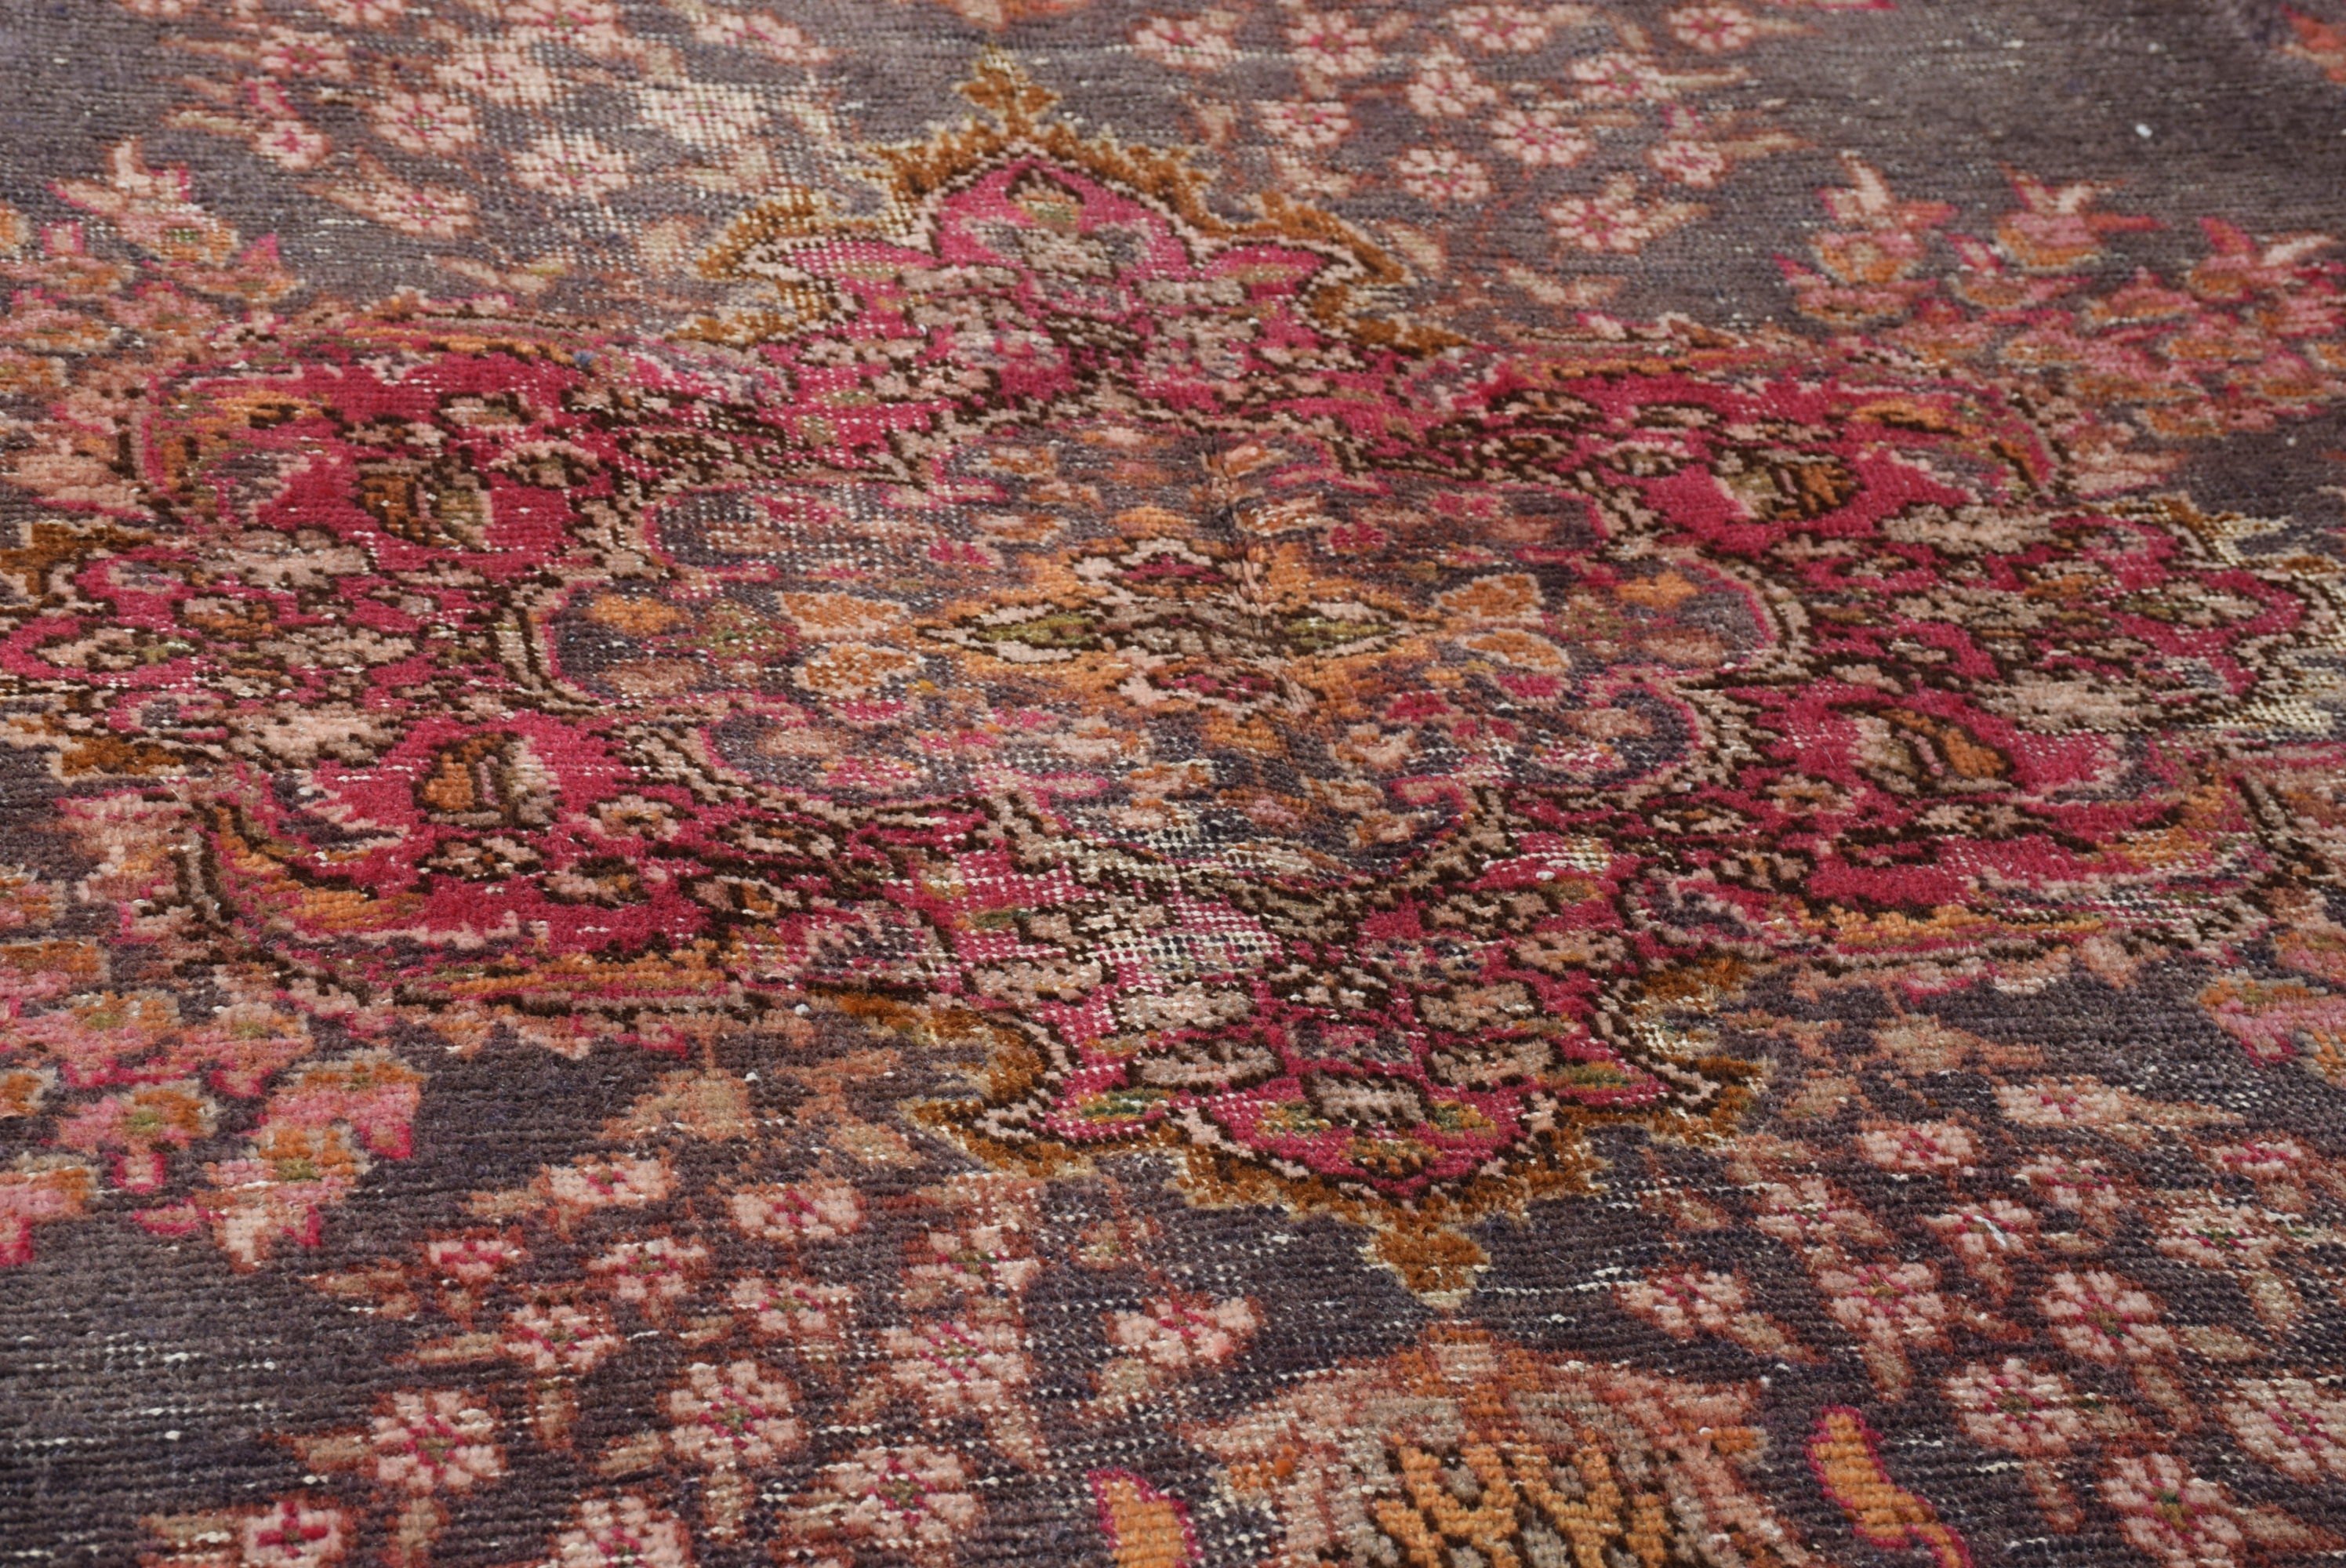 Pink Bedroom Rug, Rugs for Kitchen, Floor Rugs, Kitchen Rug, Vintage Rug, 4.7x7.3 ft Area Rug, Turkish Rugs, Boho Rug